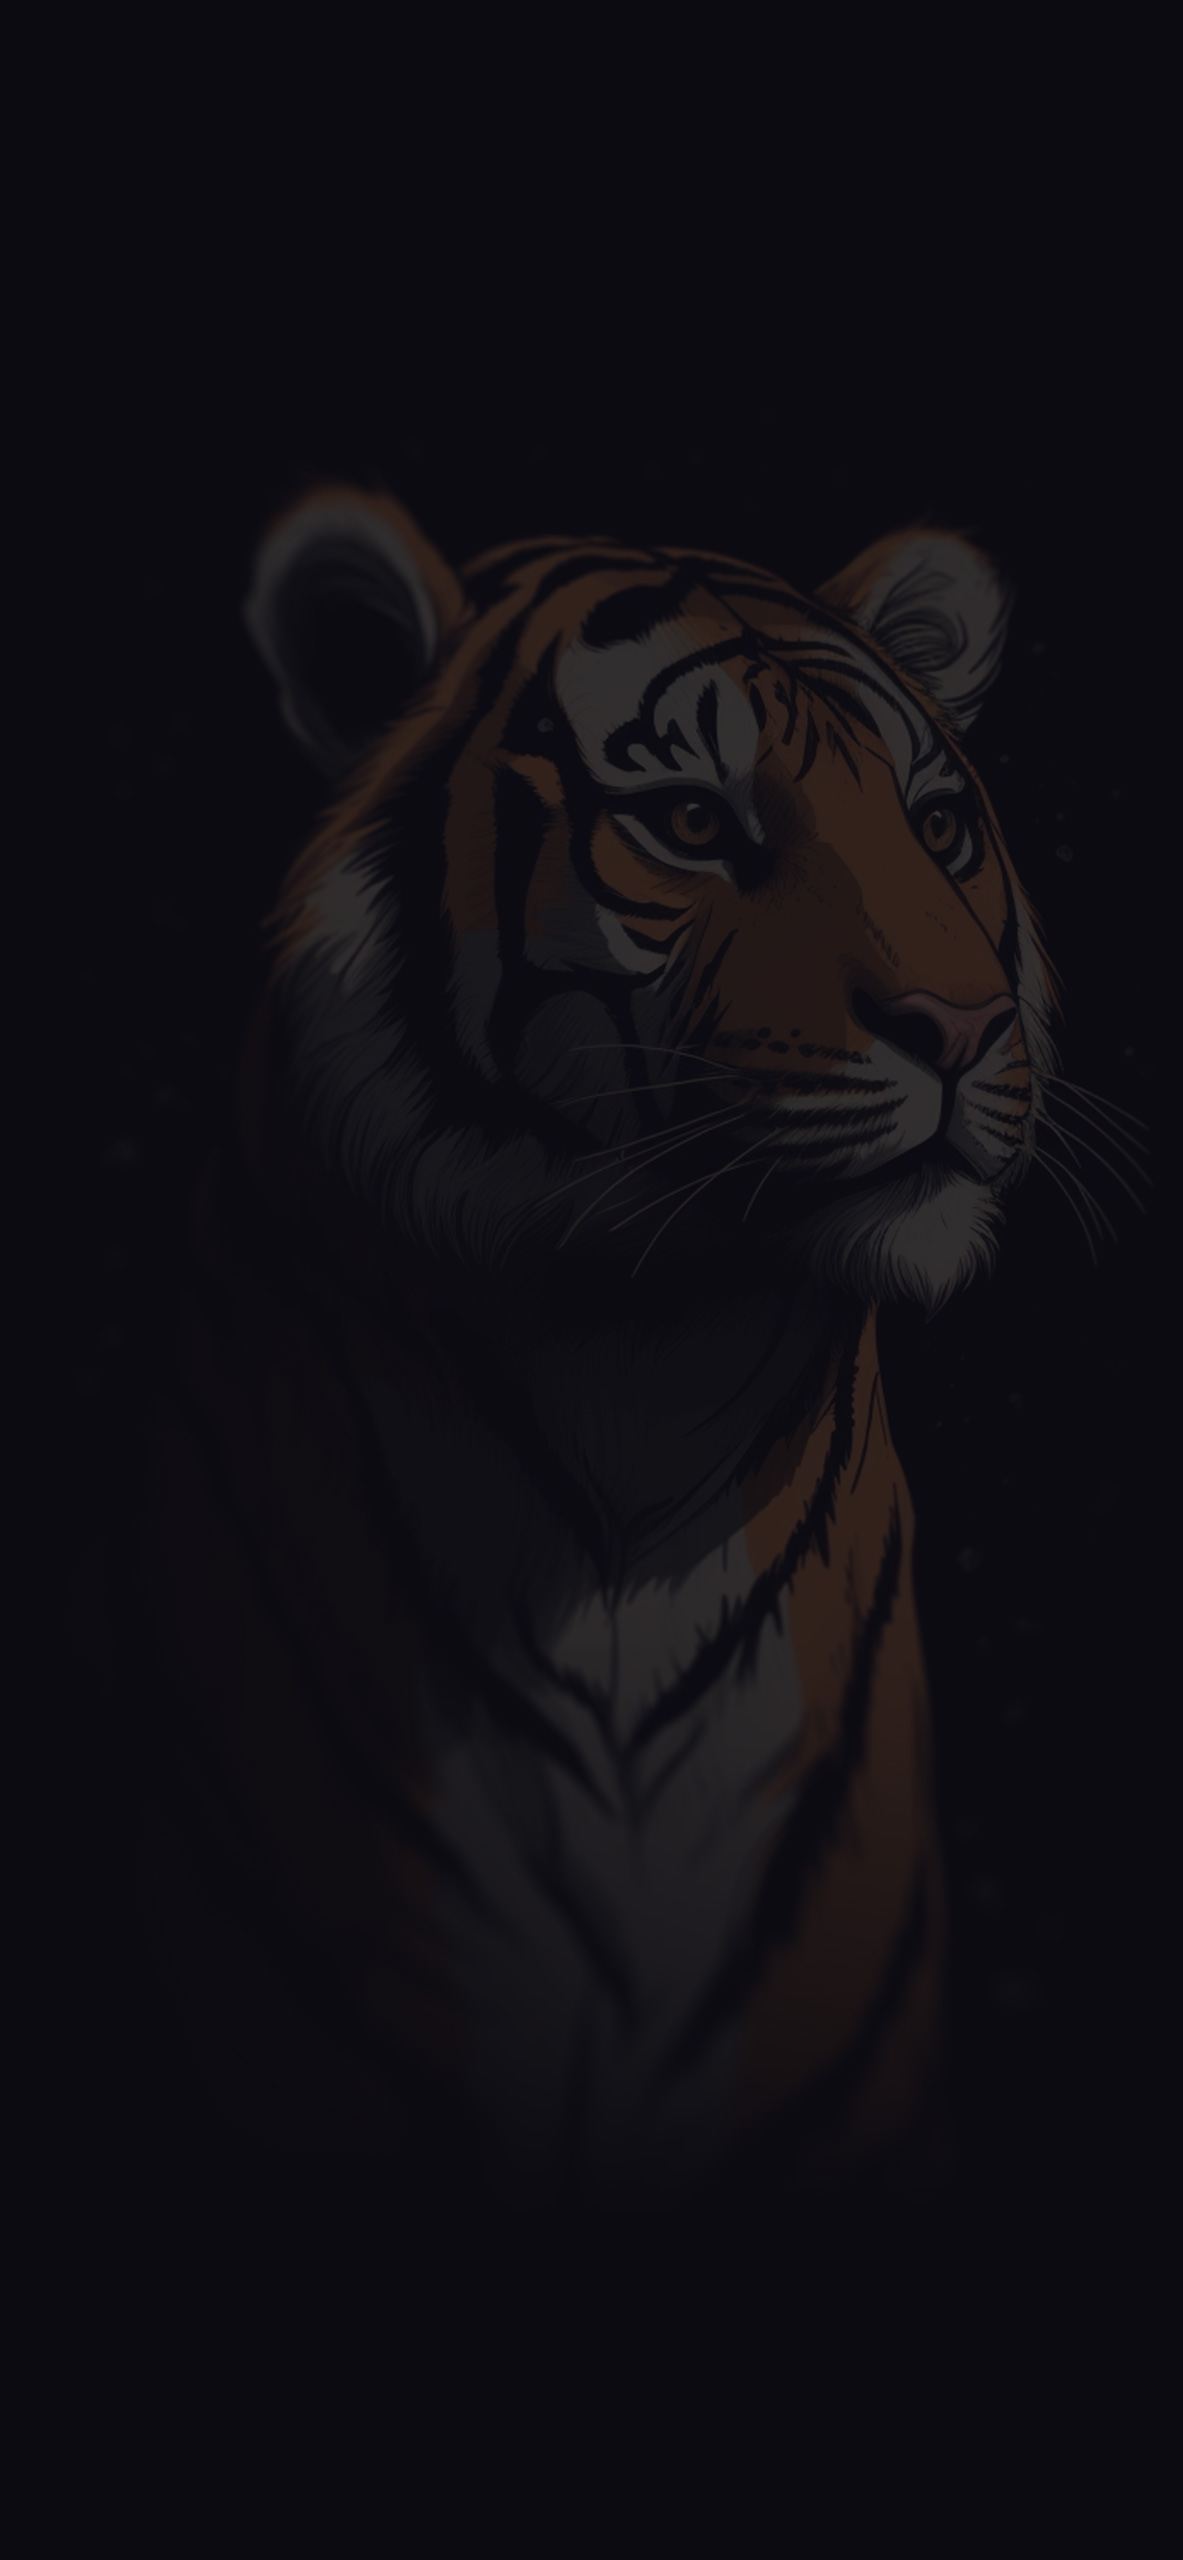 HD wallpaper: Tiger, Roaring, Dark background, HD | Wallpaper Flare